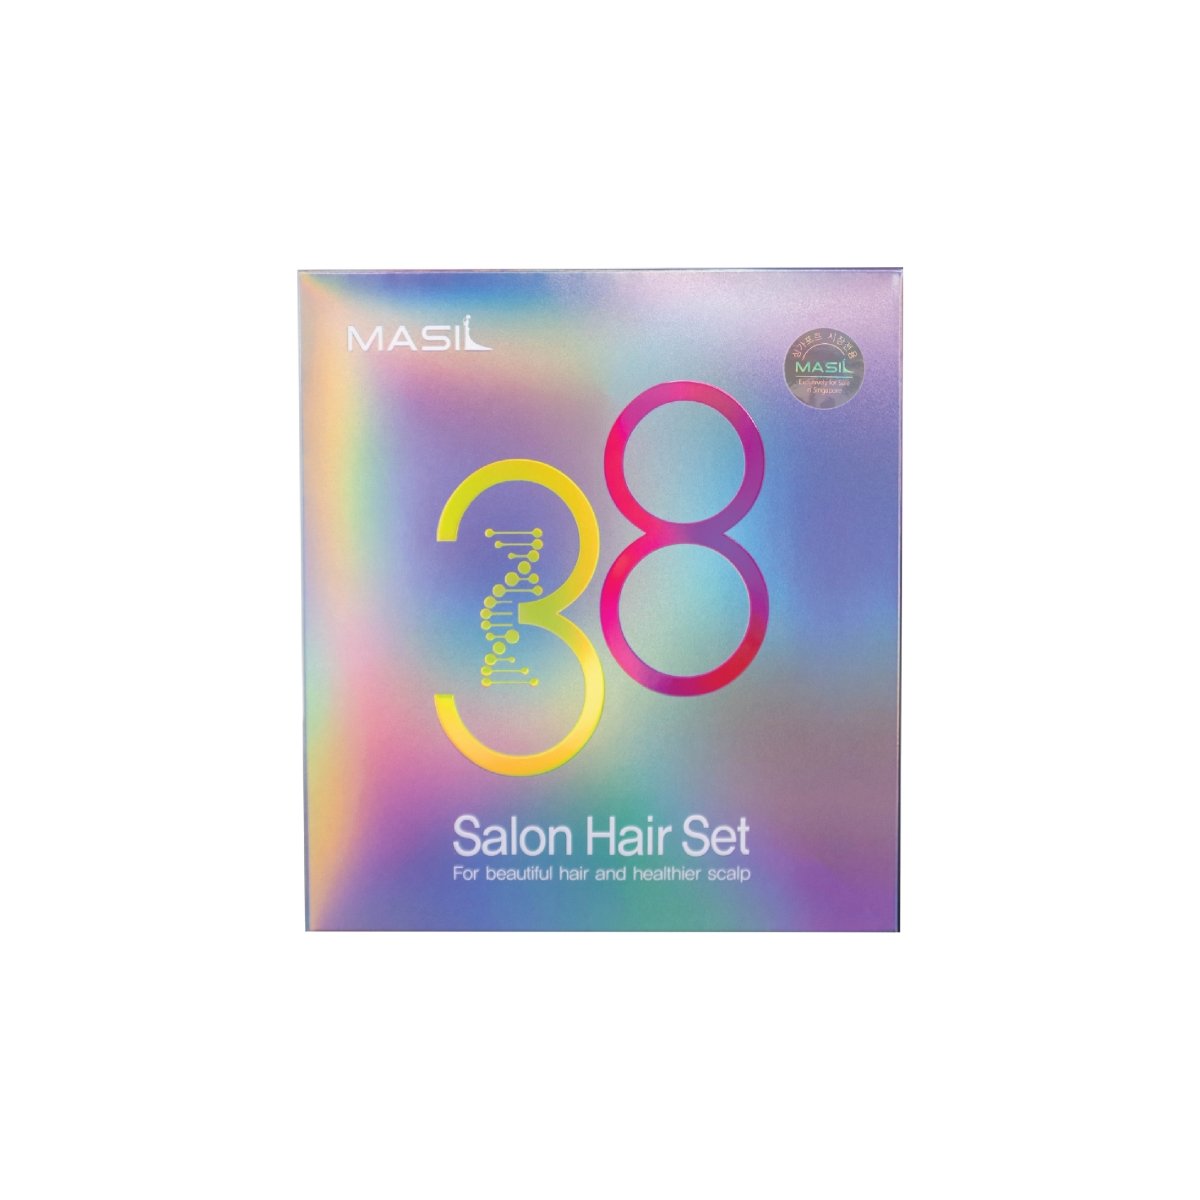 MASIL - 38 Limited Edition Salon Hair Set - Stellar K-Beauty